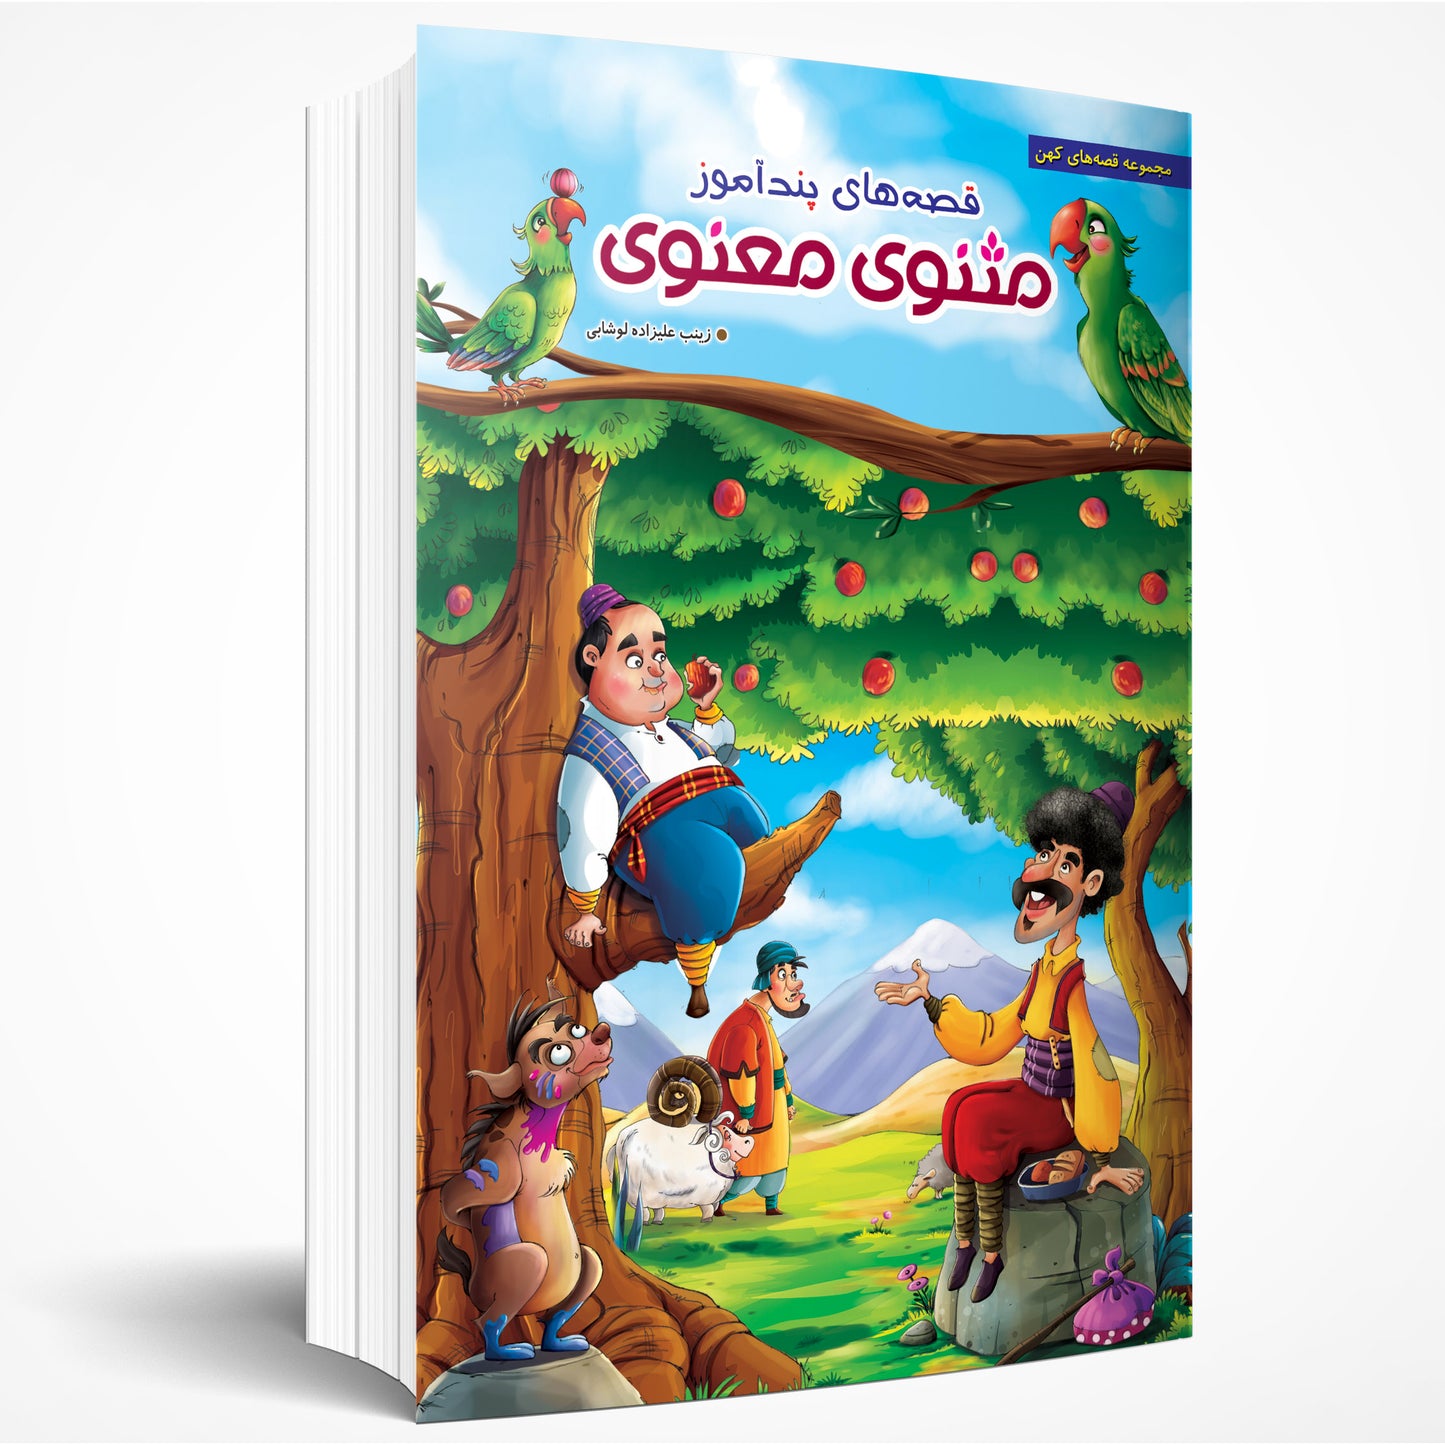 قصه های پند آموز مثنوی مولانا- Informative stories from Masnavi (Mathnawi), Rumi